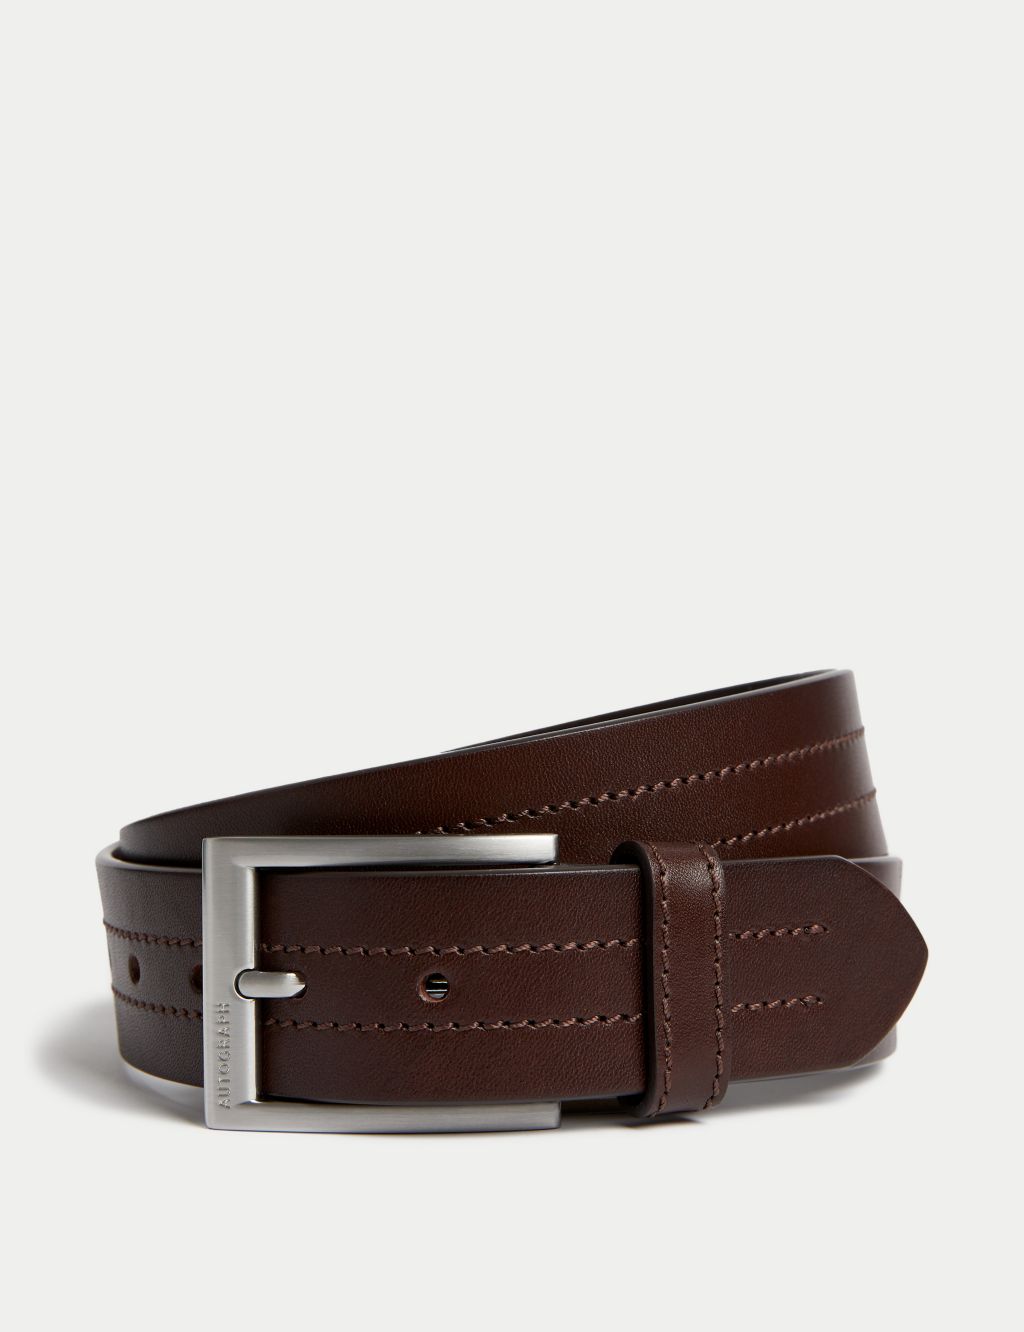 Italian Leather Rectangular Buckle Belt image 1